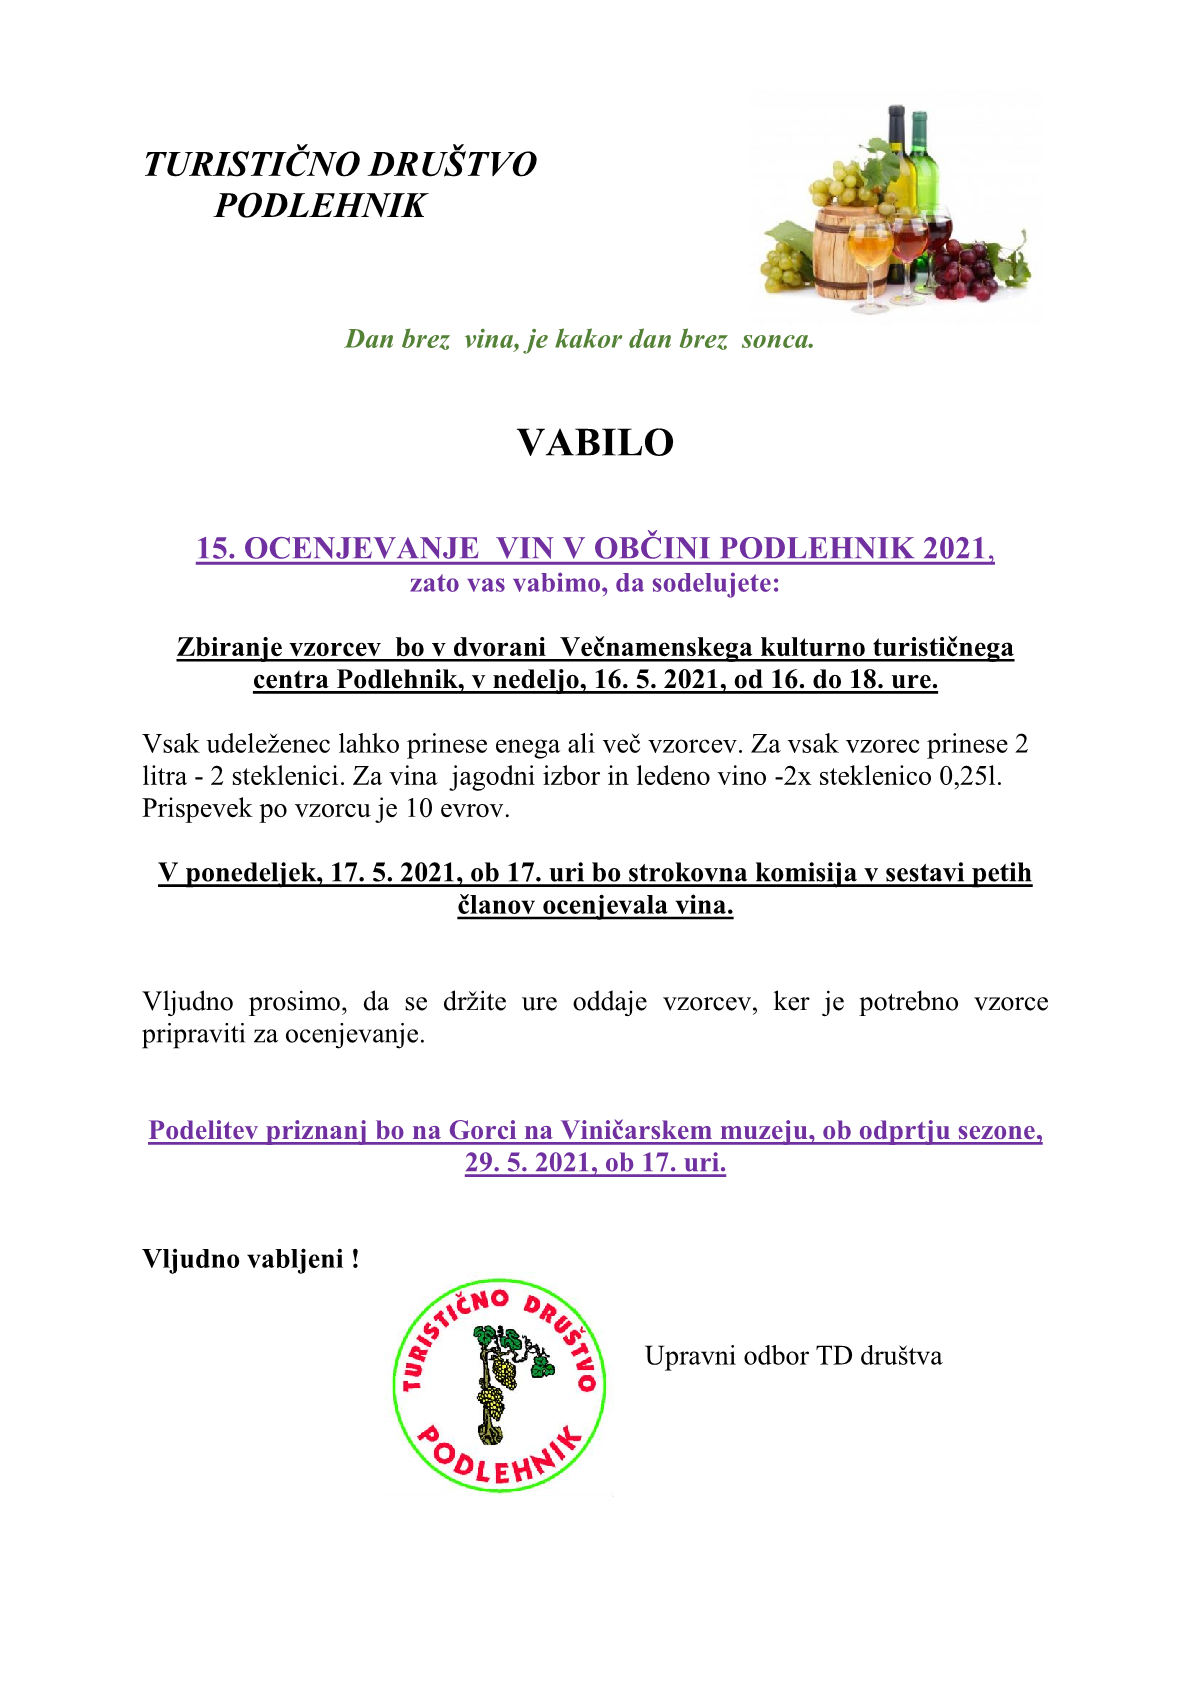 vabilo 2021 (002)1.png